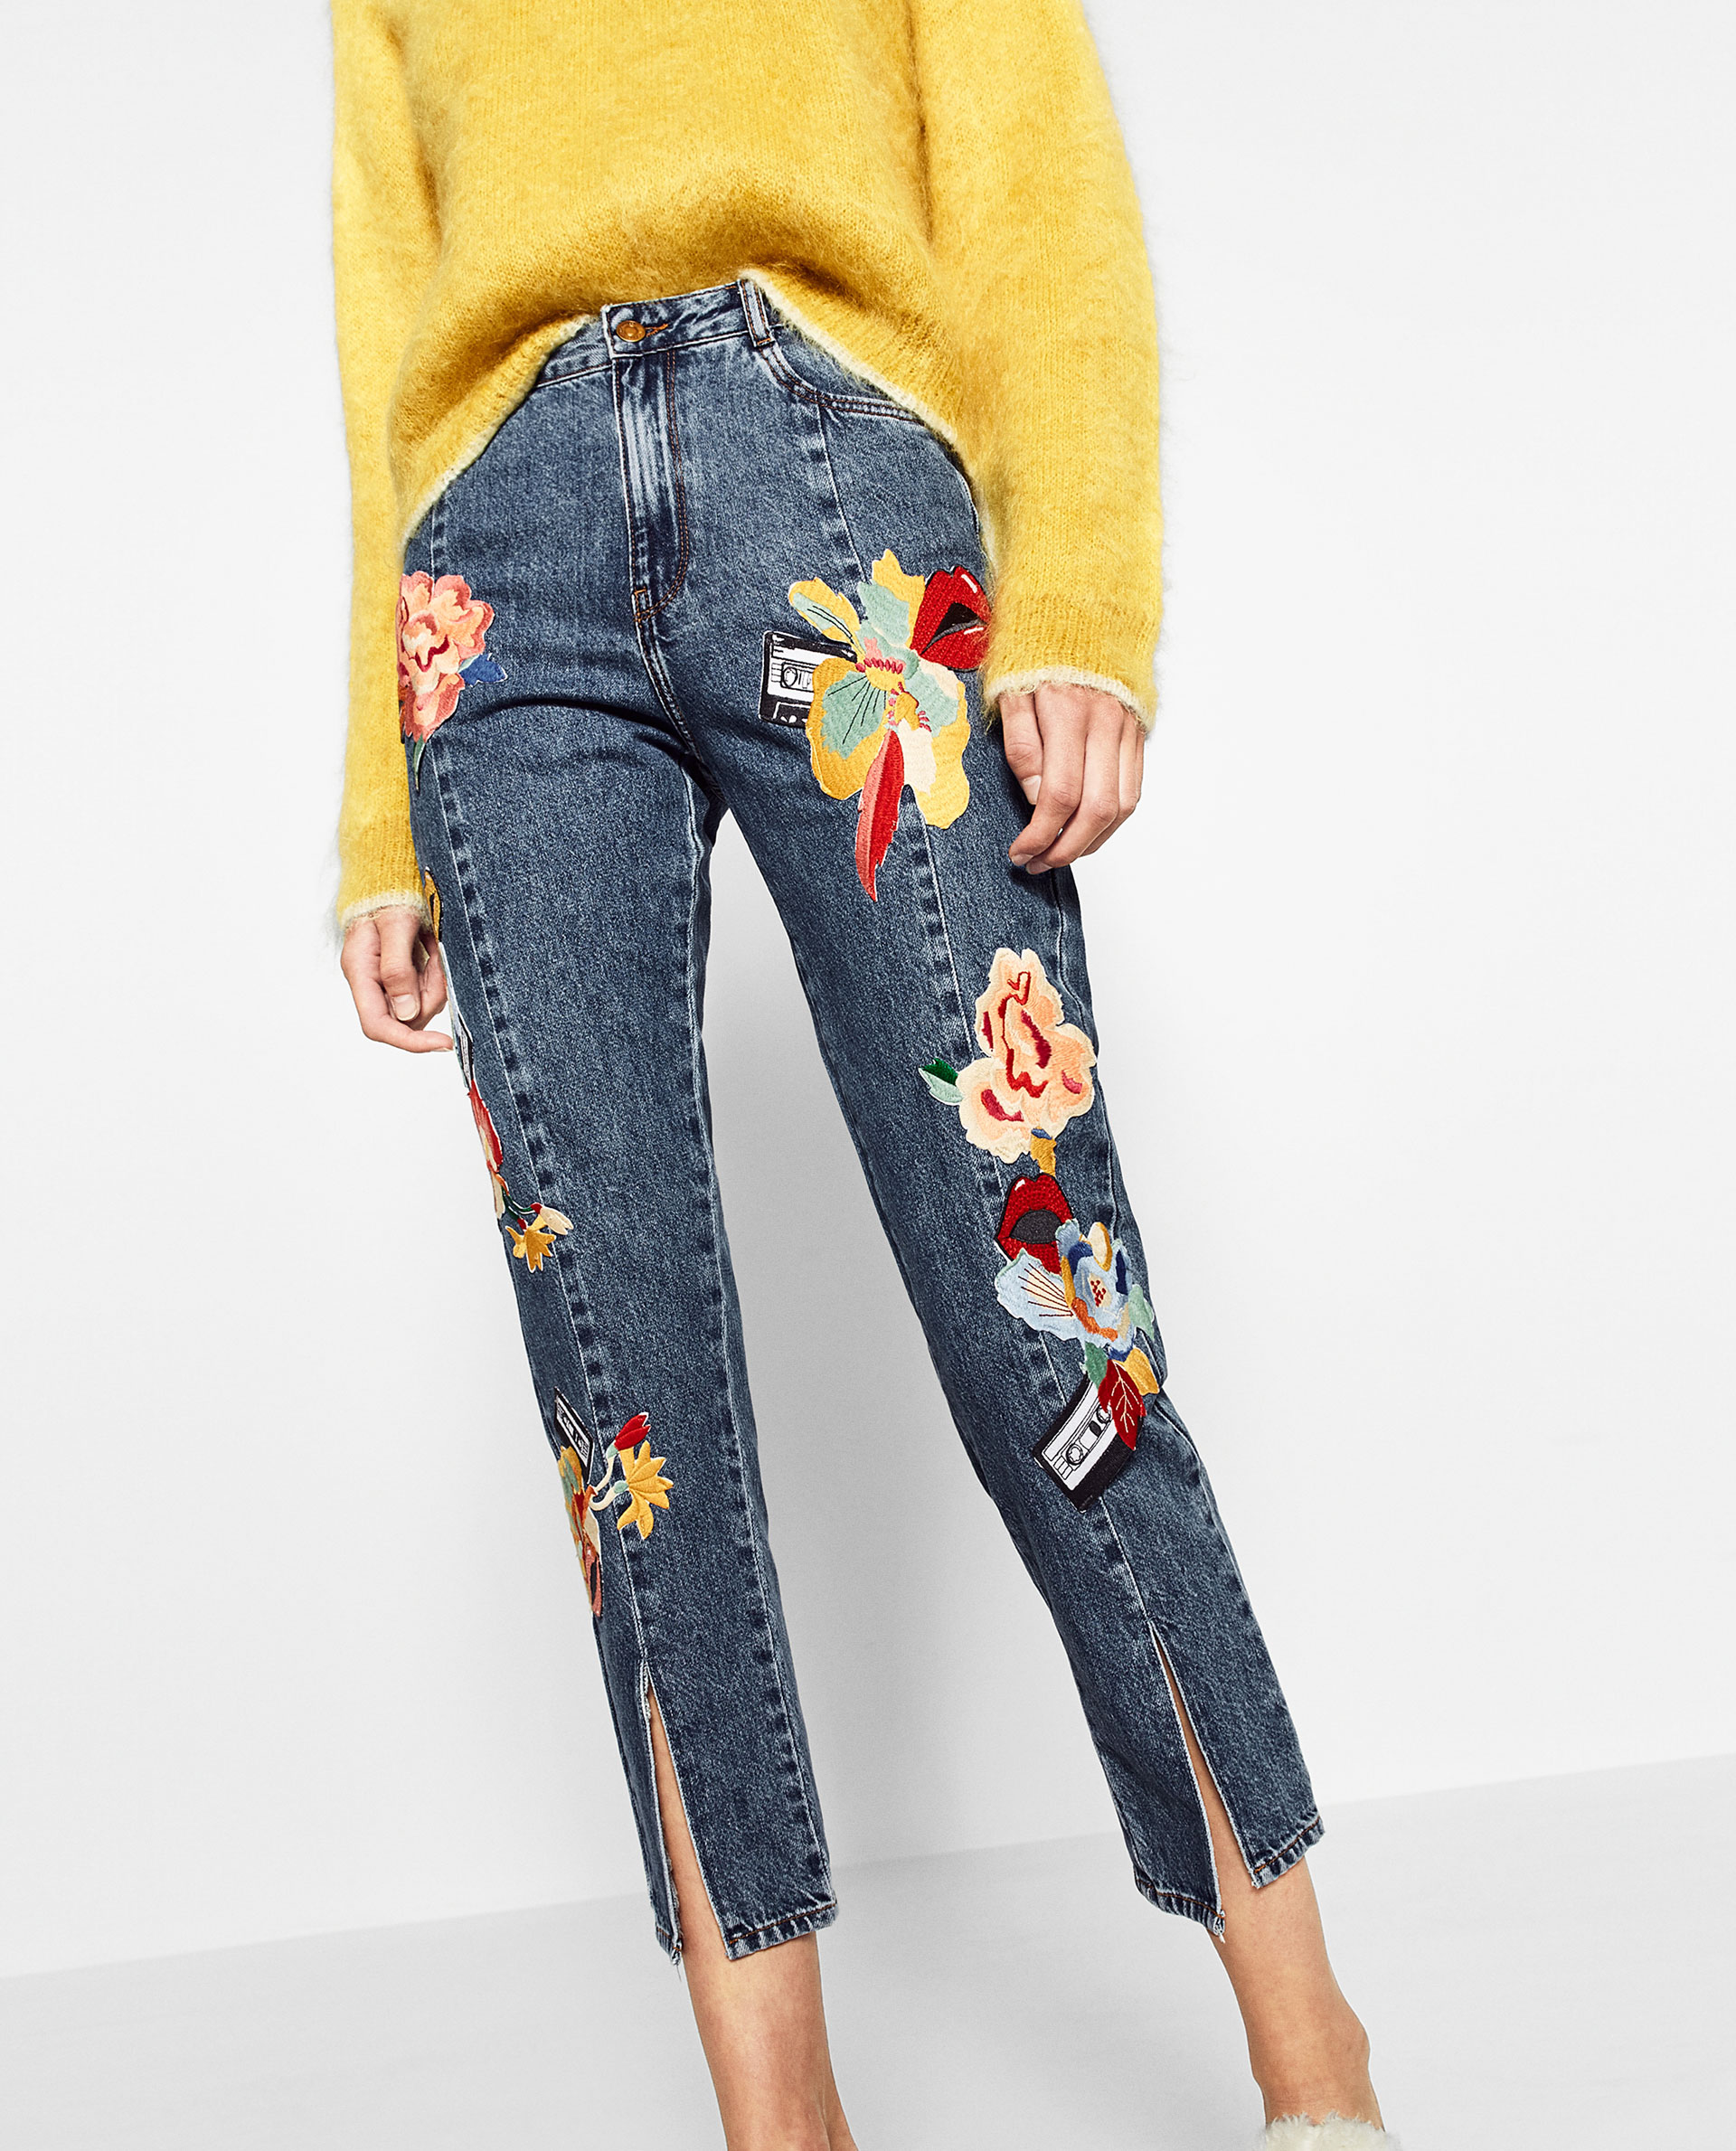 Zara Embroidered jeans.jpg